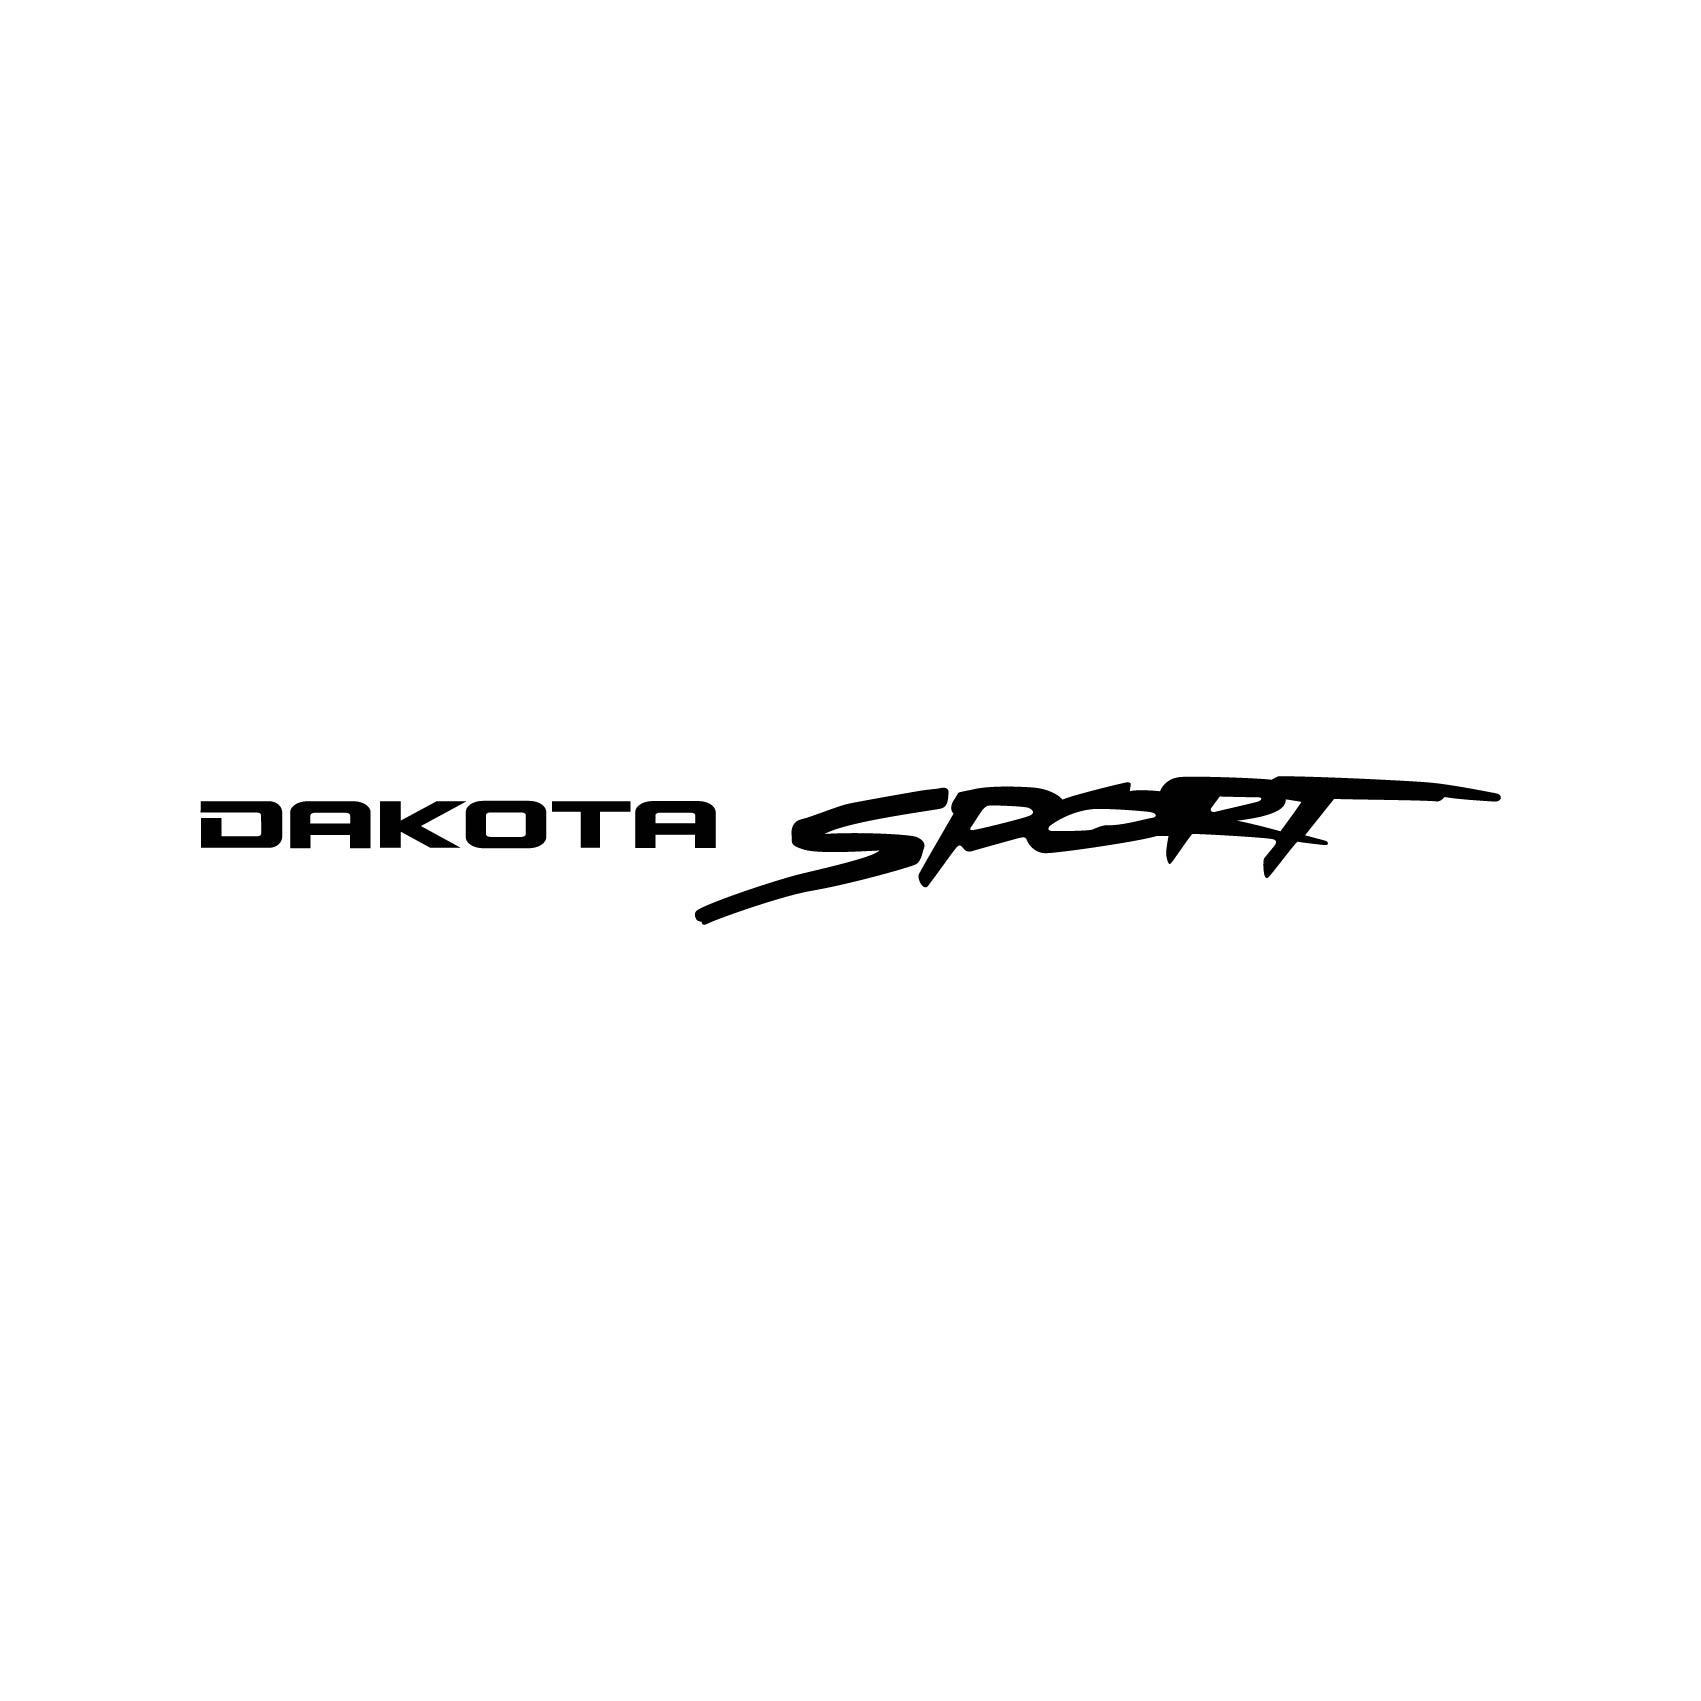 stickers-dodge-dakota-sport-ref14dodge4x4-autocollant-4x4-sticker-pour-tout-terrain-off-road